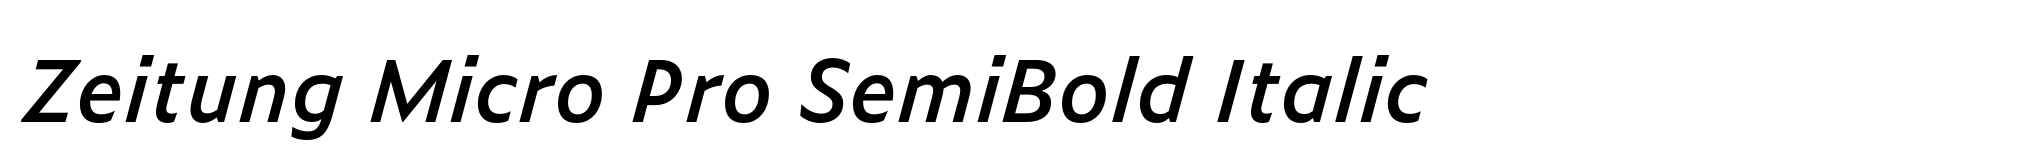 Zeitung Micro Pro SemiBold Italic image